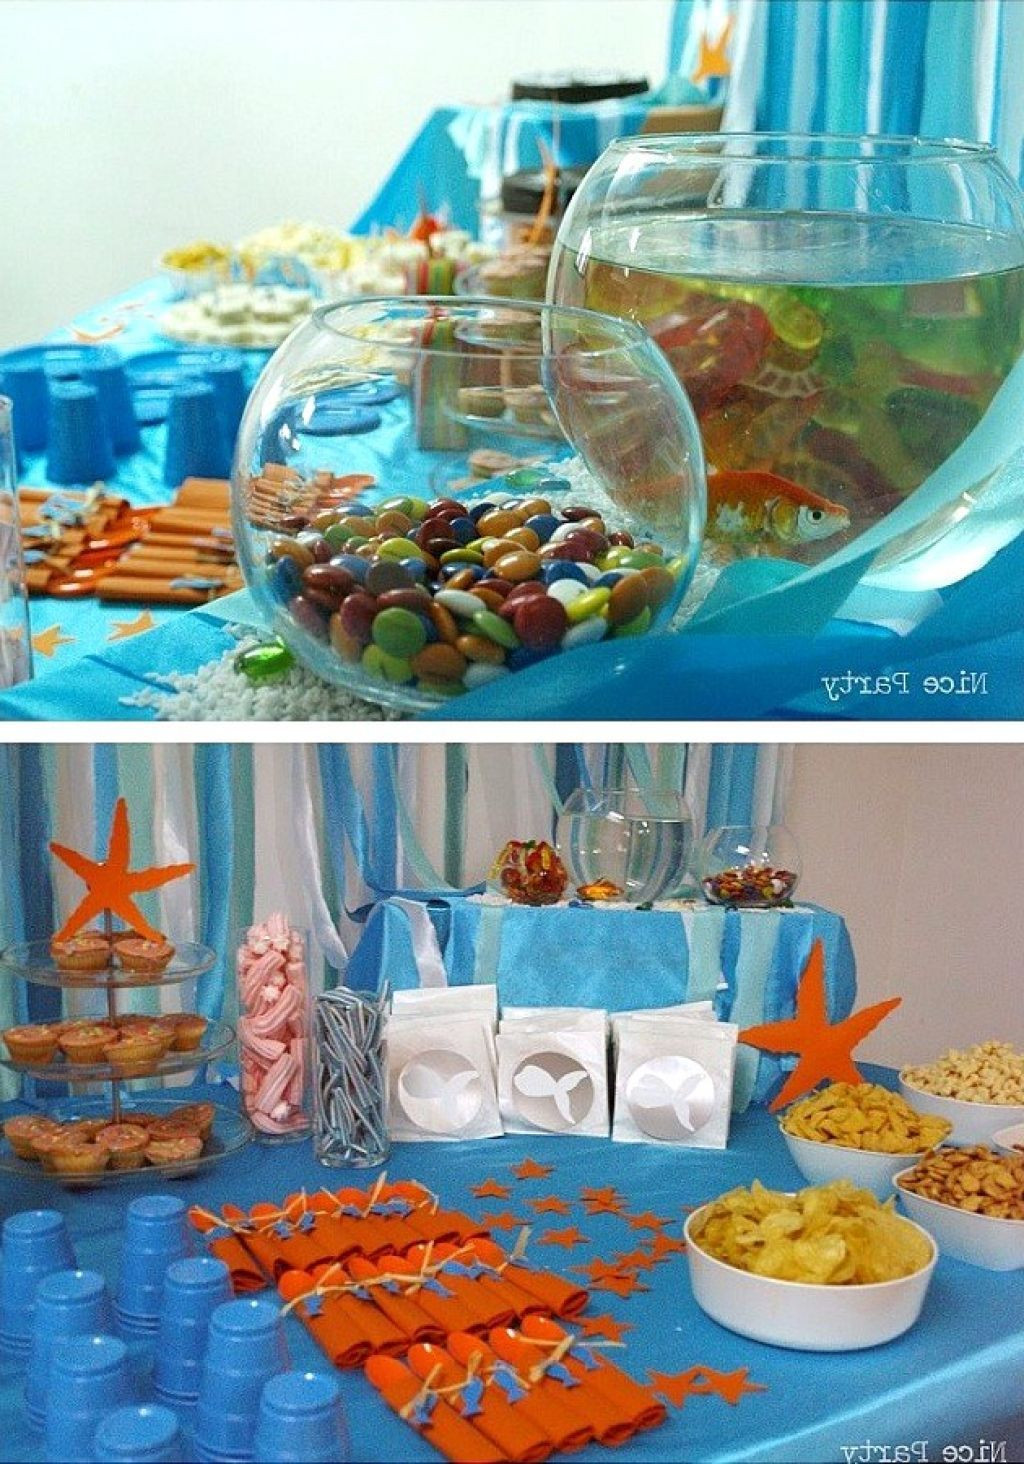 Nemo Birthday Decorations
 10 Nemo Party Decorations Ideas